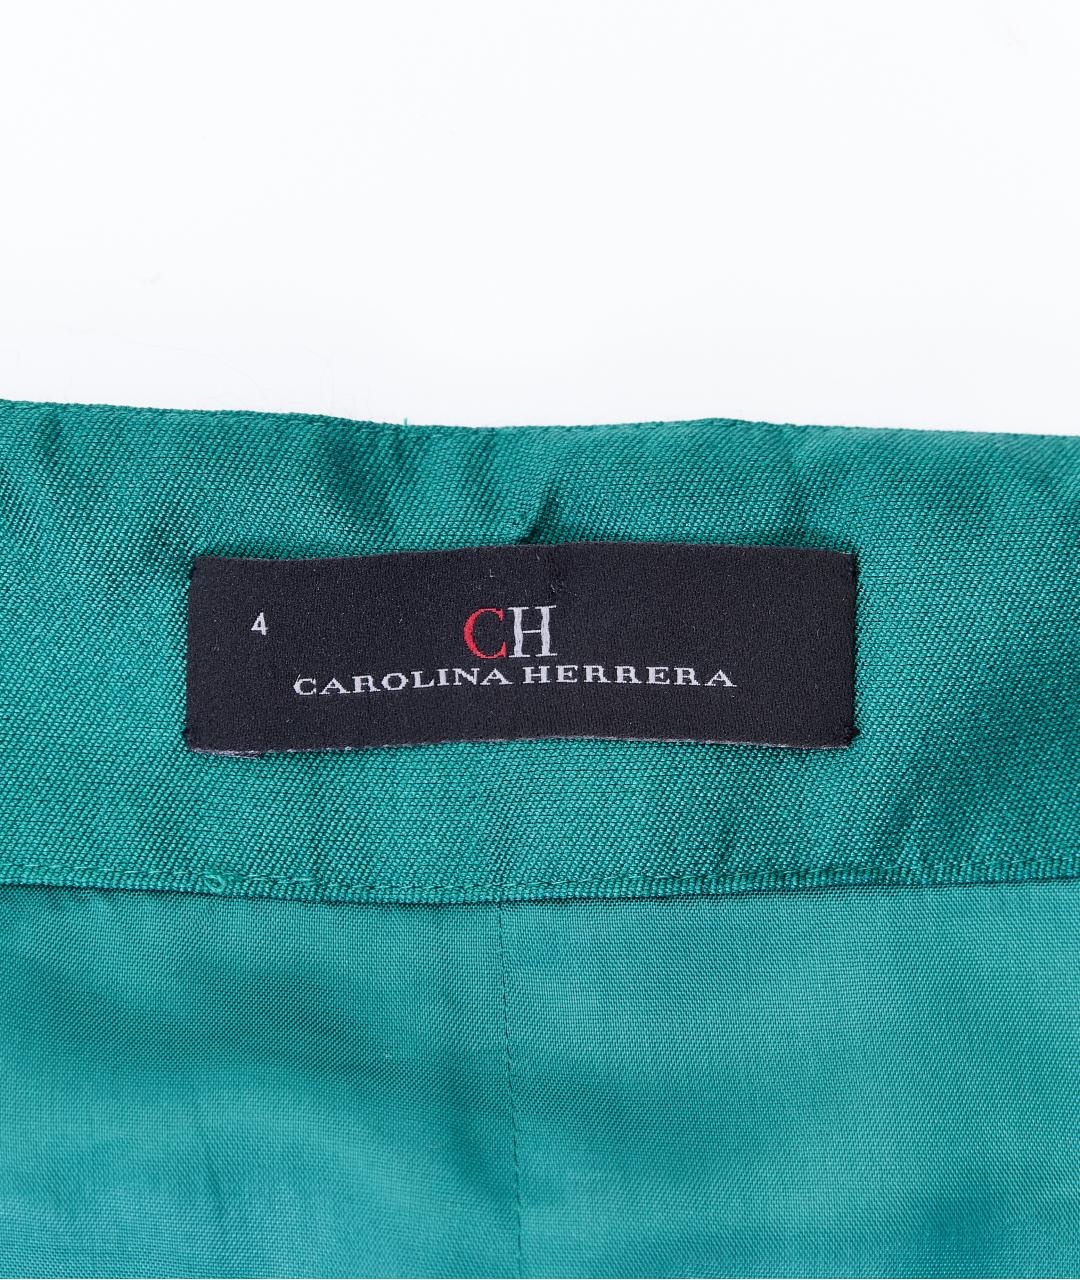 CH CAROLINA HERRERA Зеленая шелковая юбка макси, фото 5